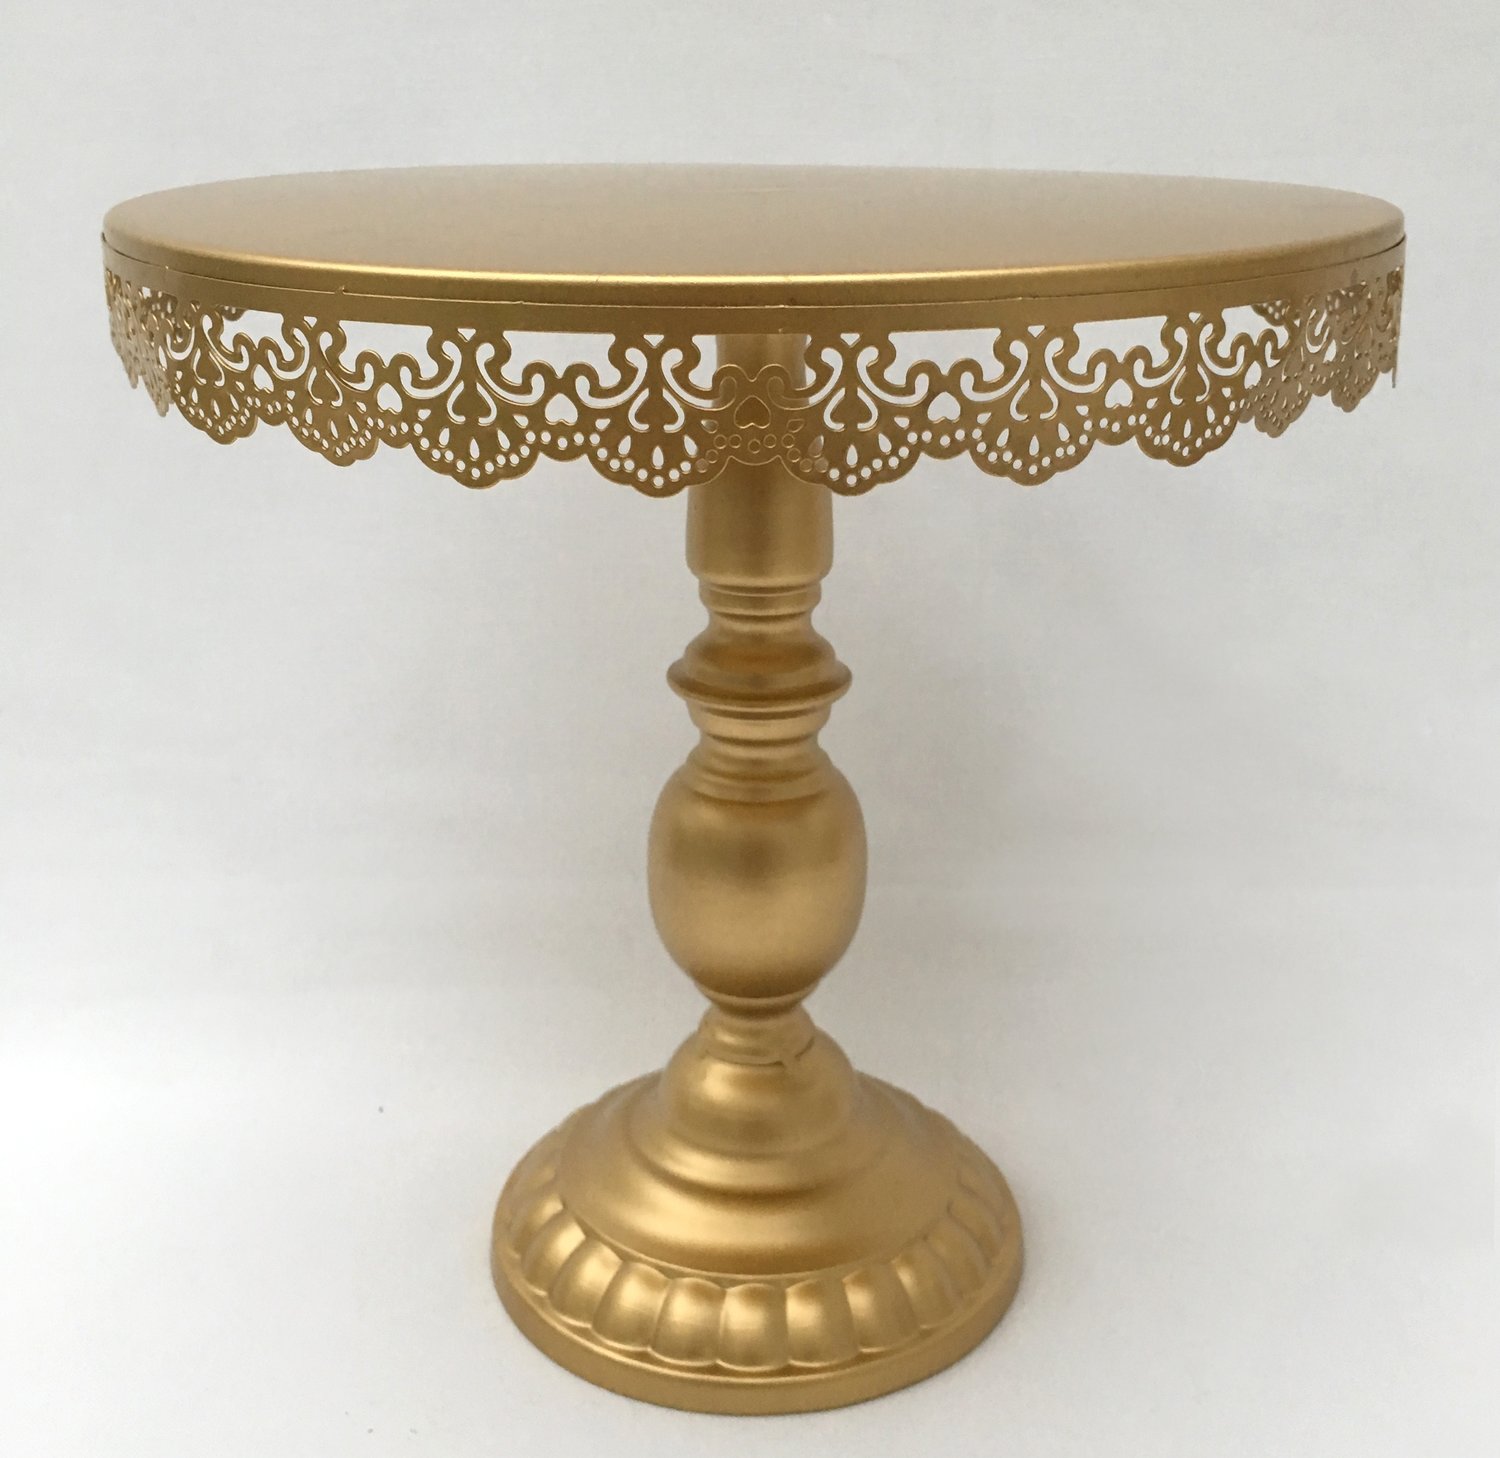 Medium Gold - Vintage with Filigree Design -  Pedestal -1 Tier Cake Stand - Code GD0034M - MEDIUM SIZE  -  10" ROUND X 9" TALL